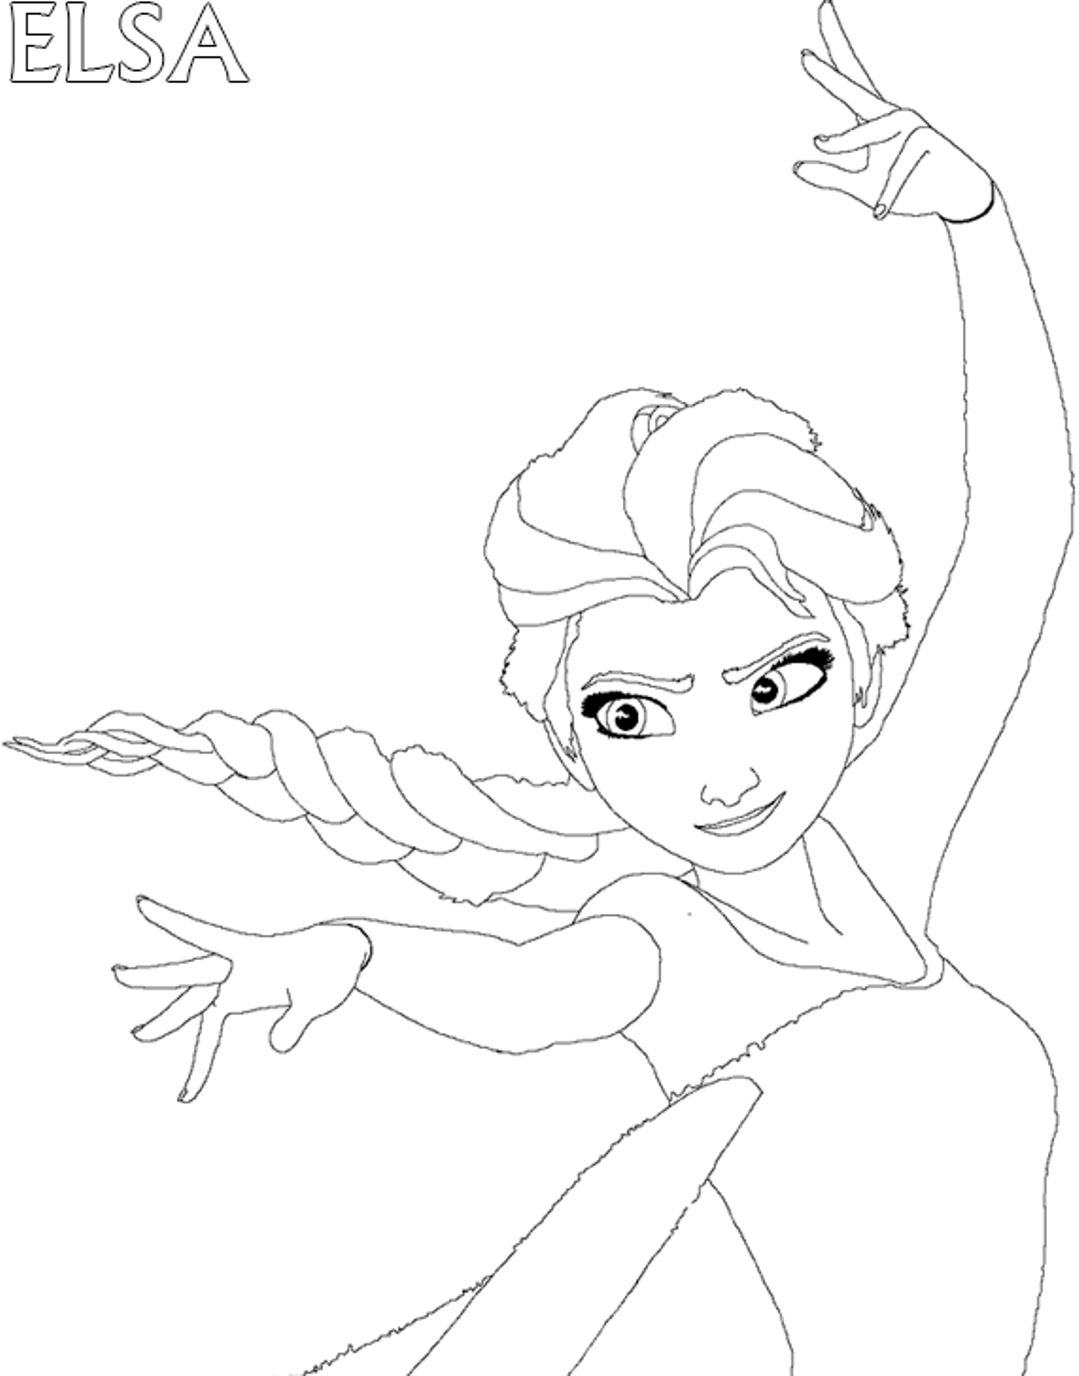 Elsa In Position For Magic